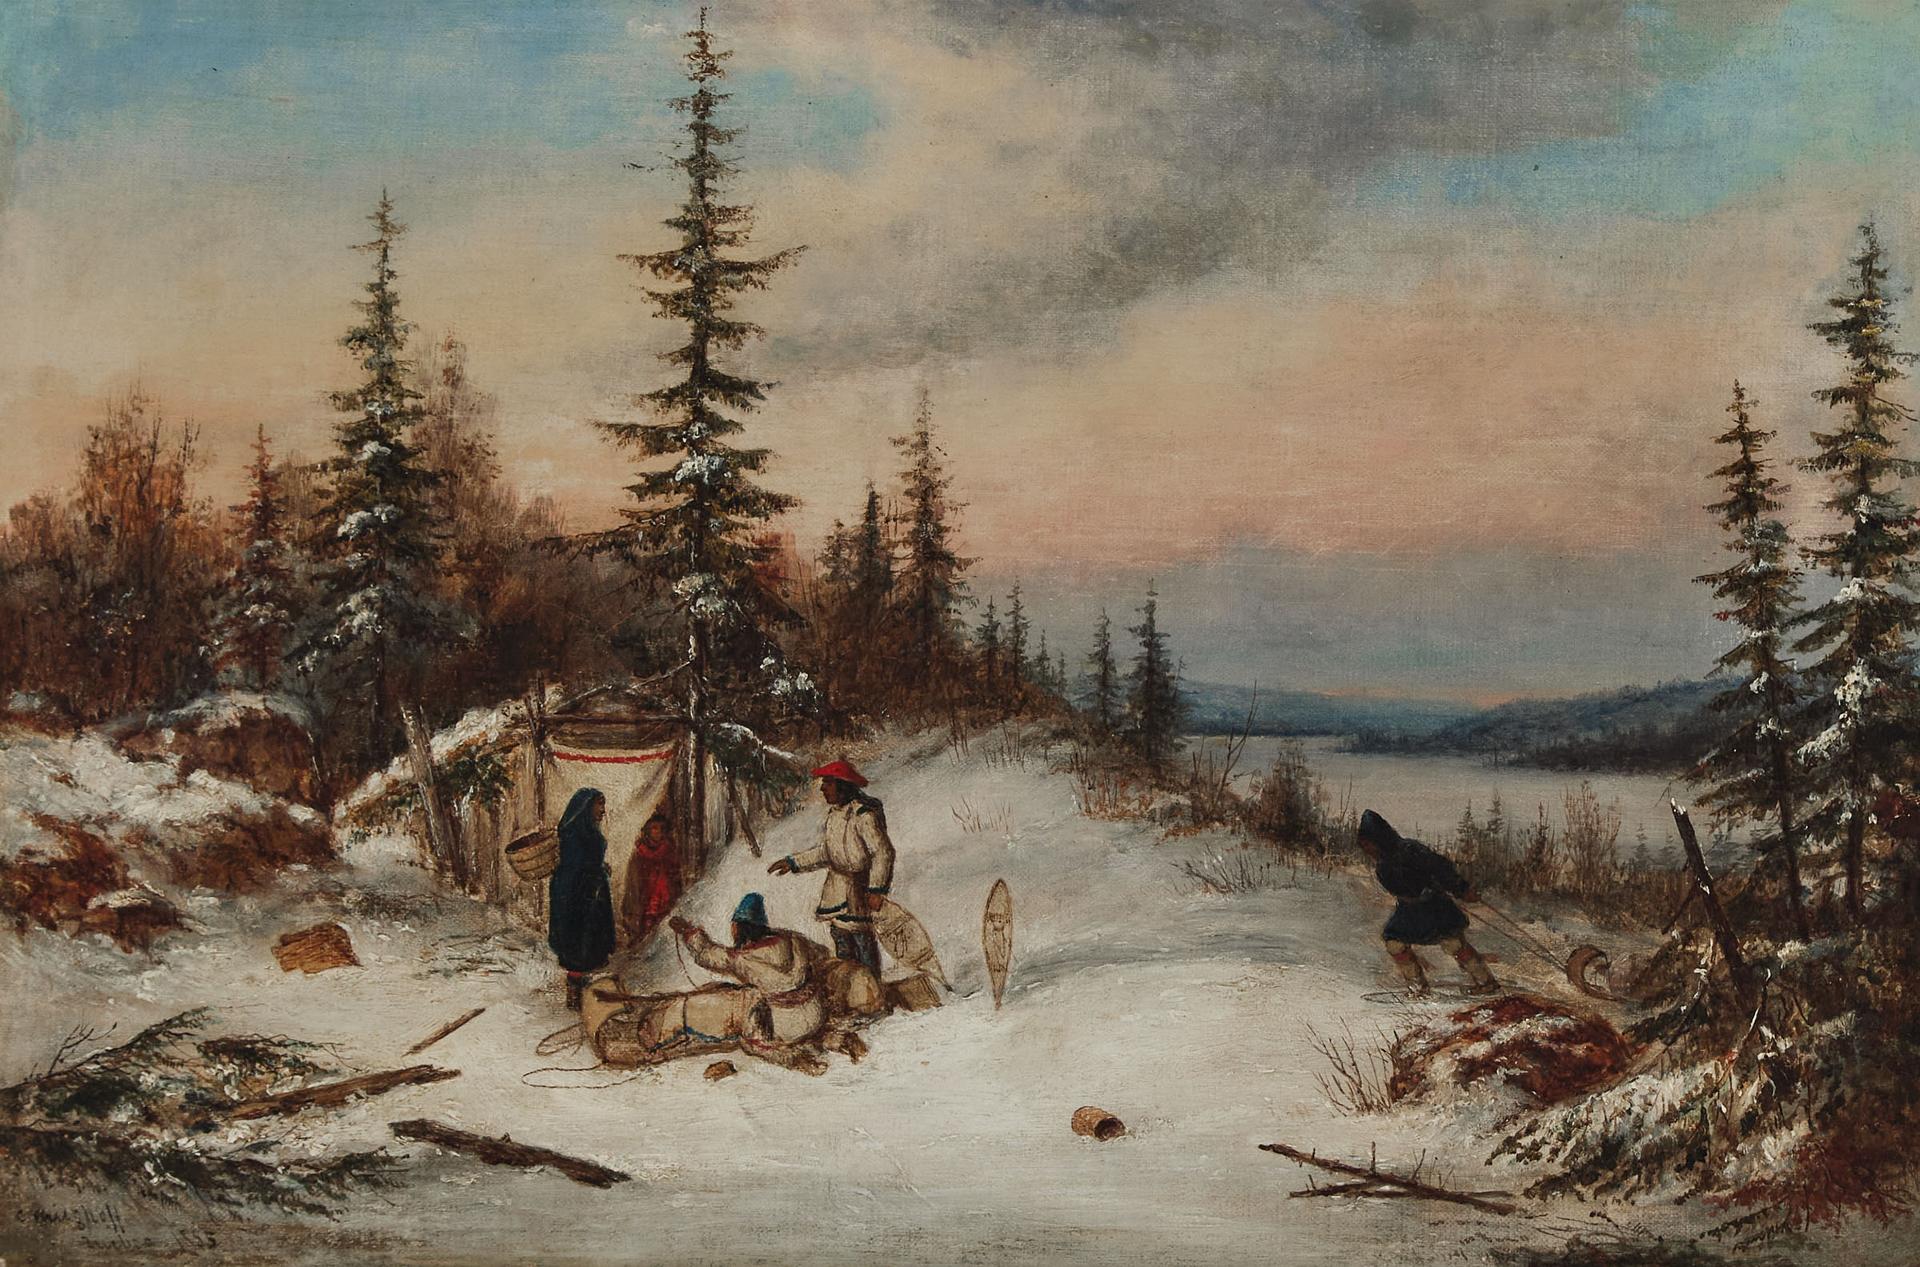 Cornelius David Krieghoff (1815-1872) - Indians Making Camp In Snow, 1855